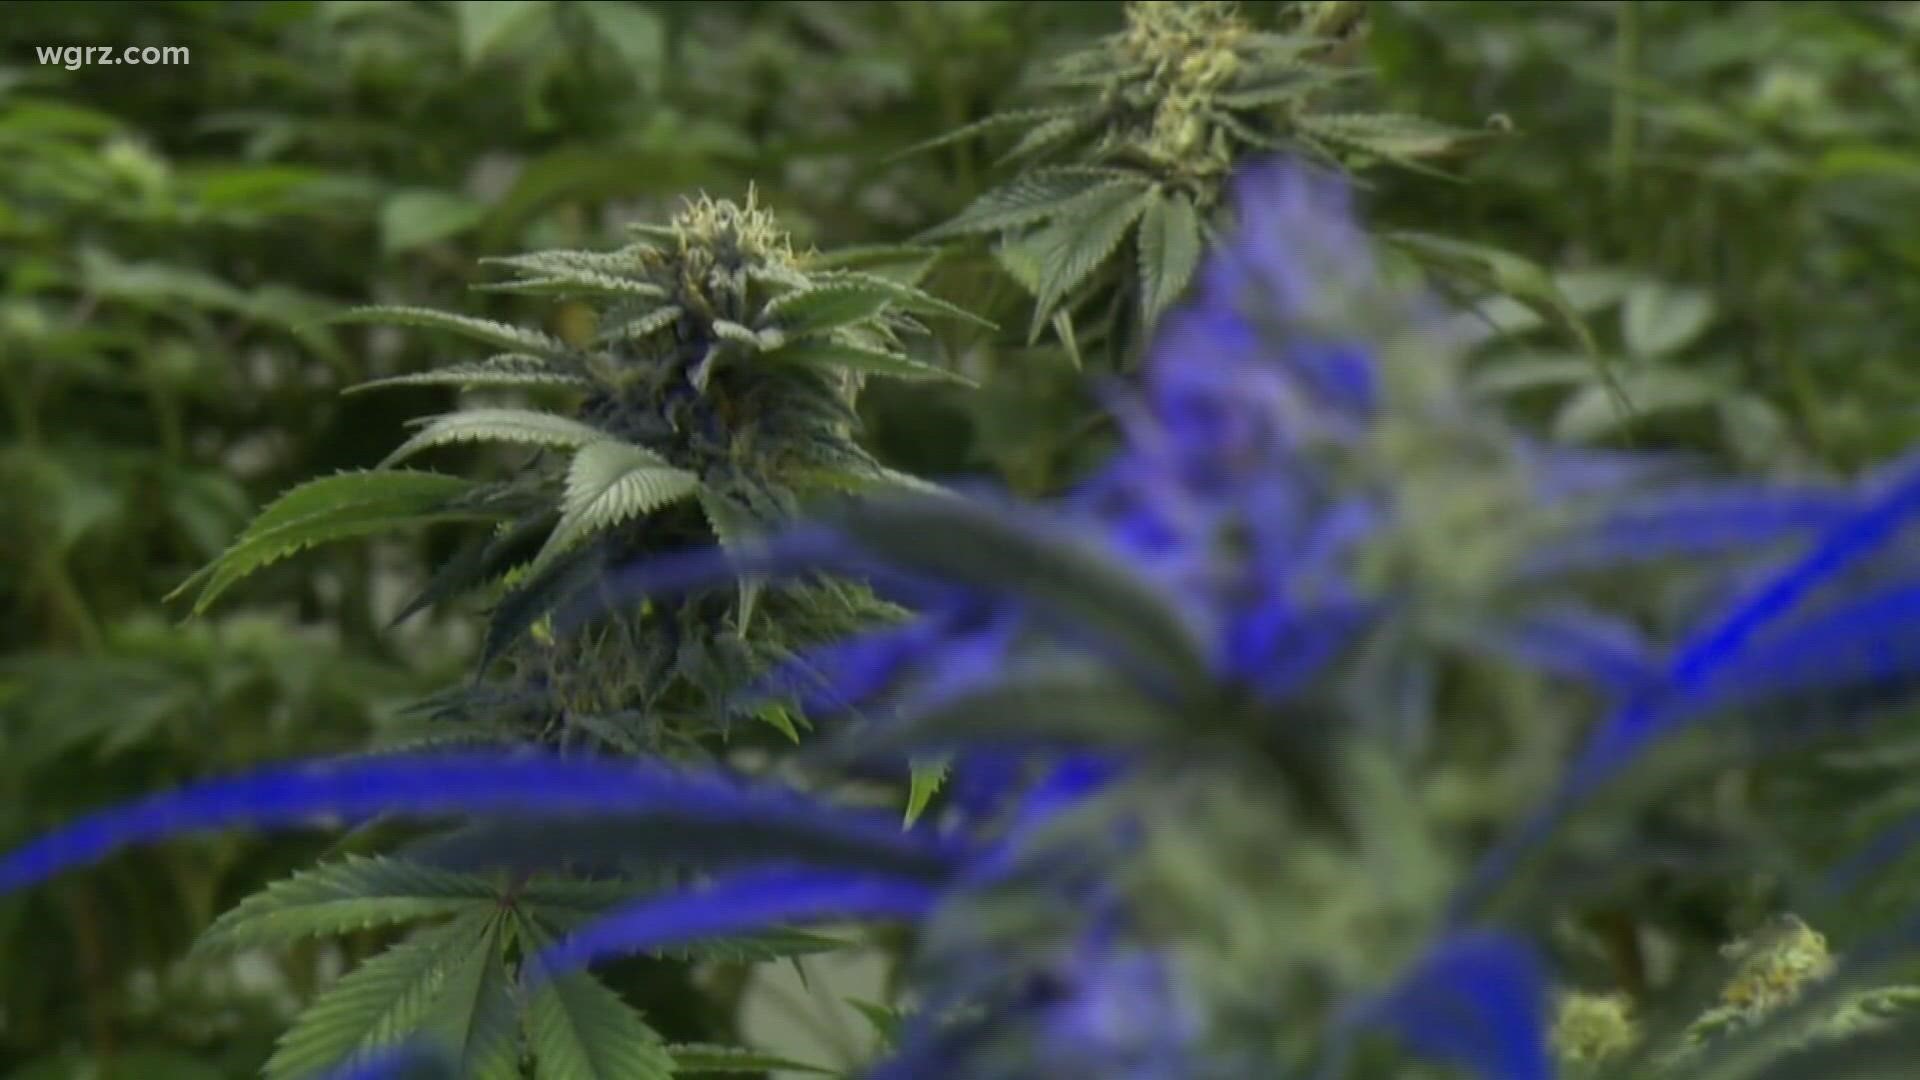 Cheektowaga town board to hold meeting on marijuana dispensaries